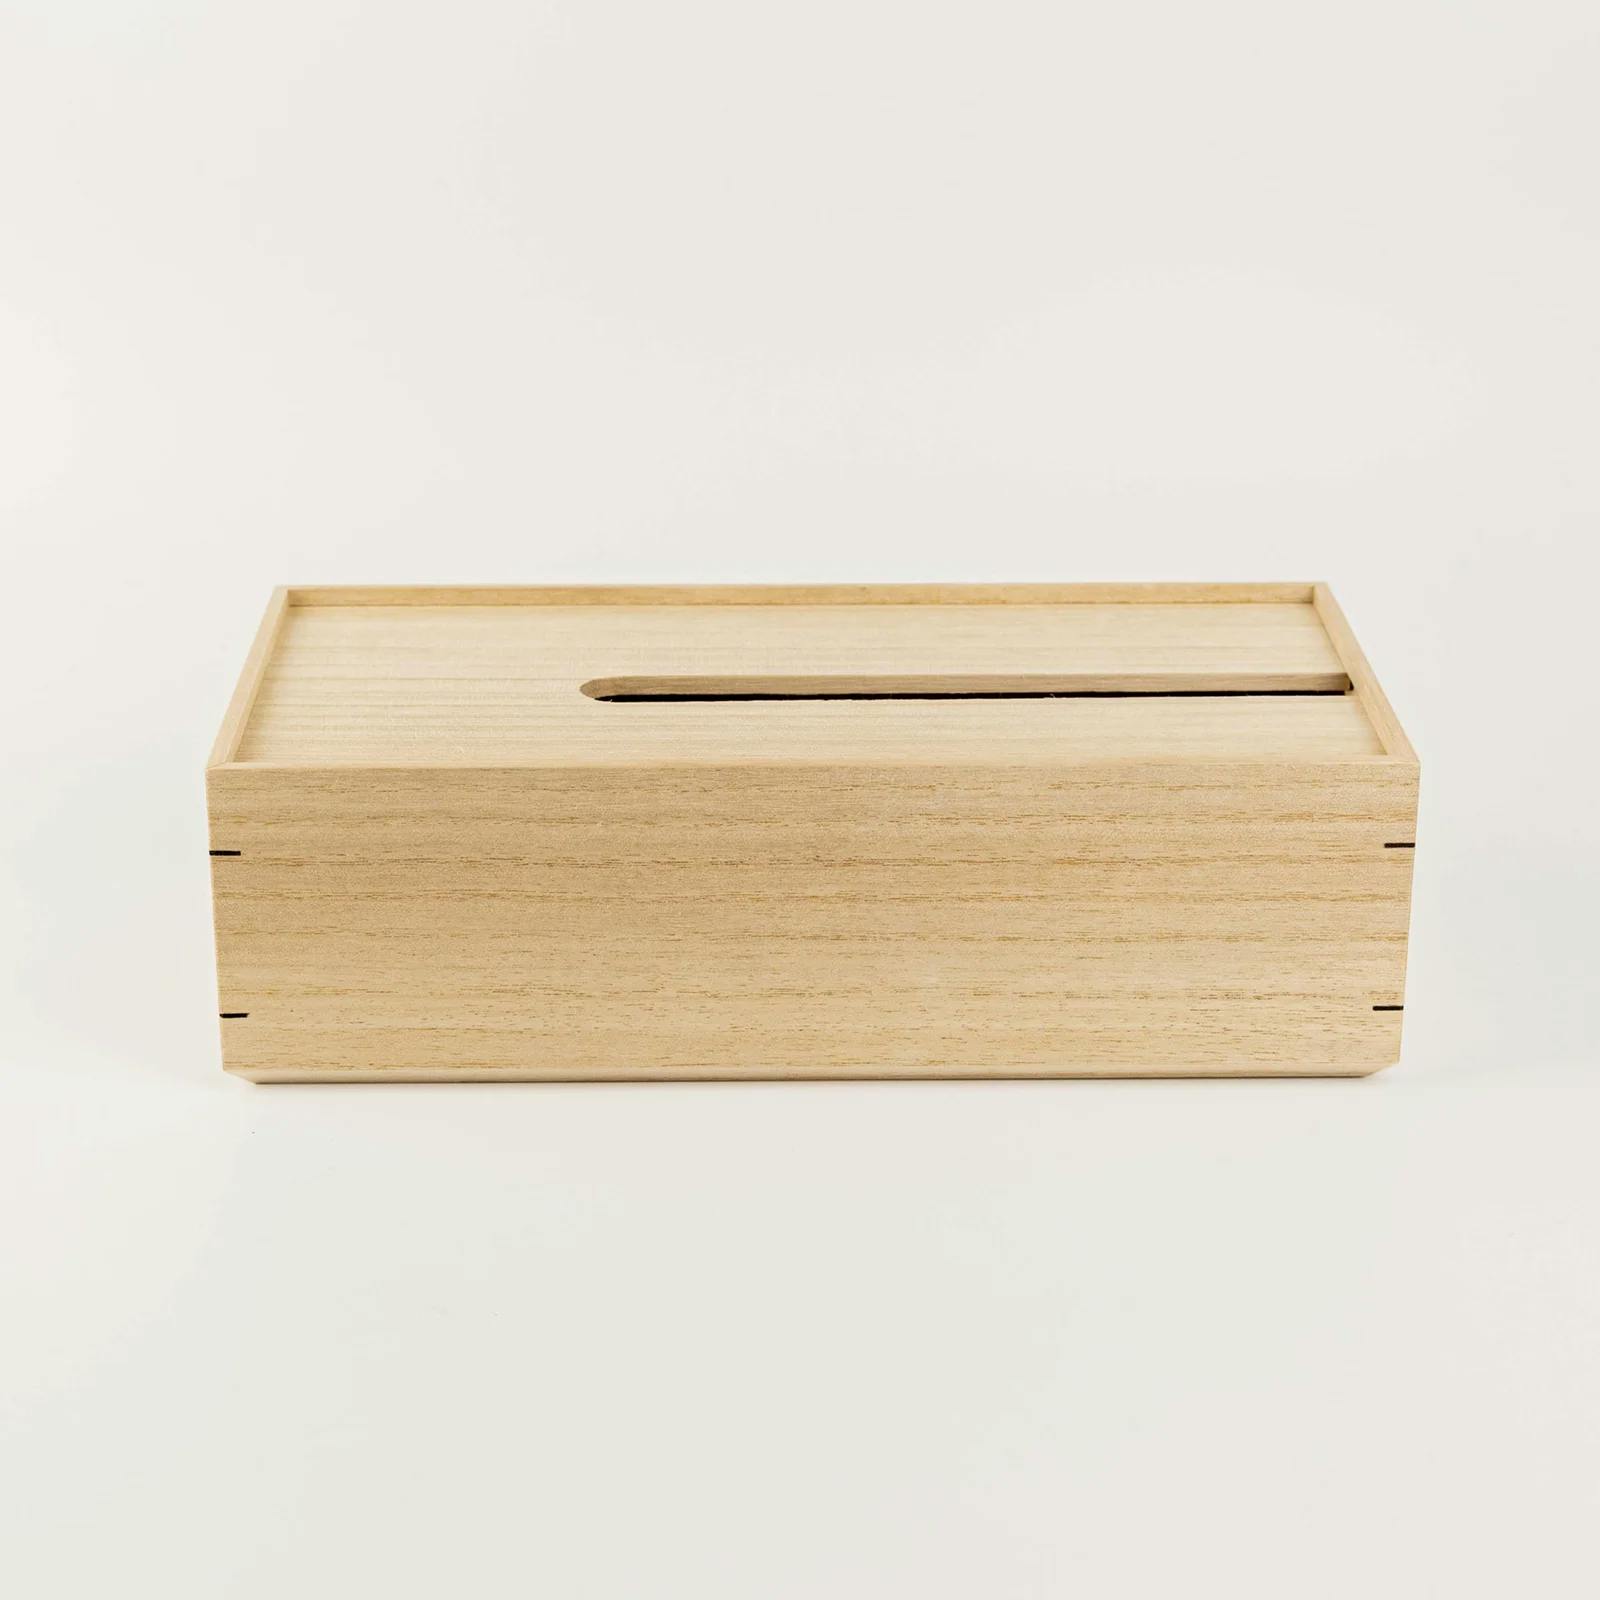 Image of Kiri tissue box